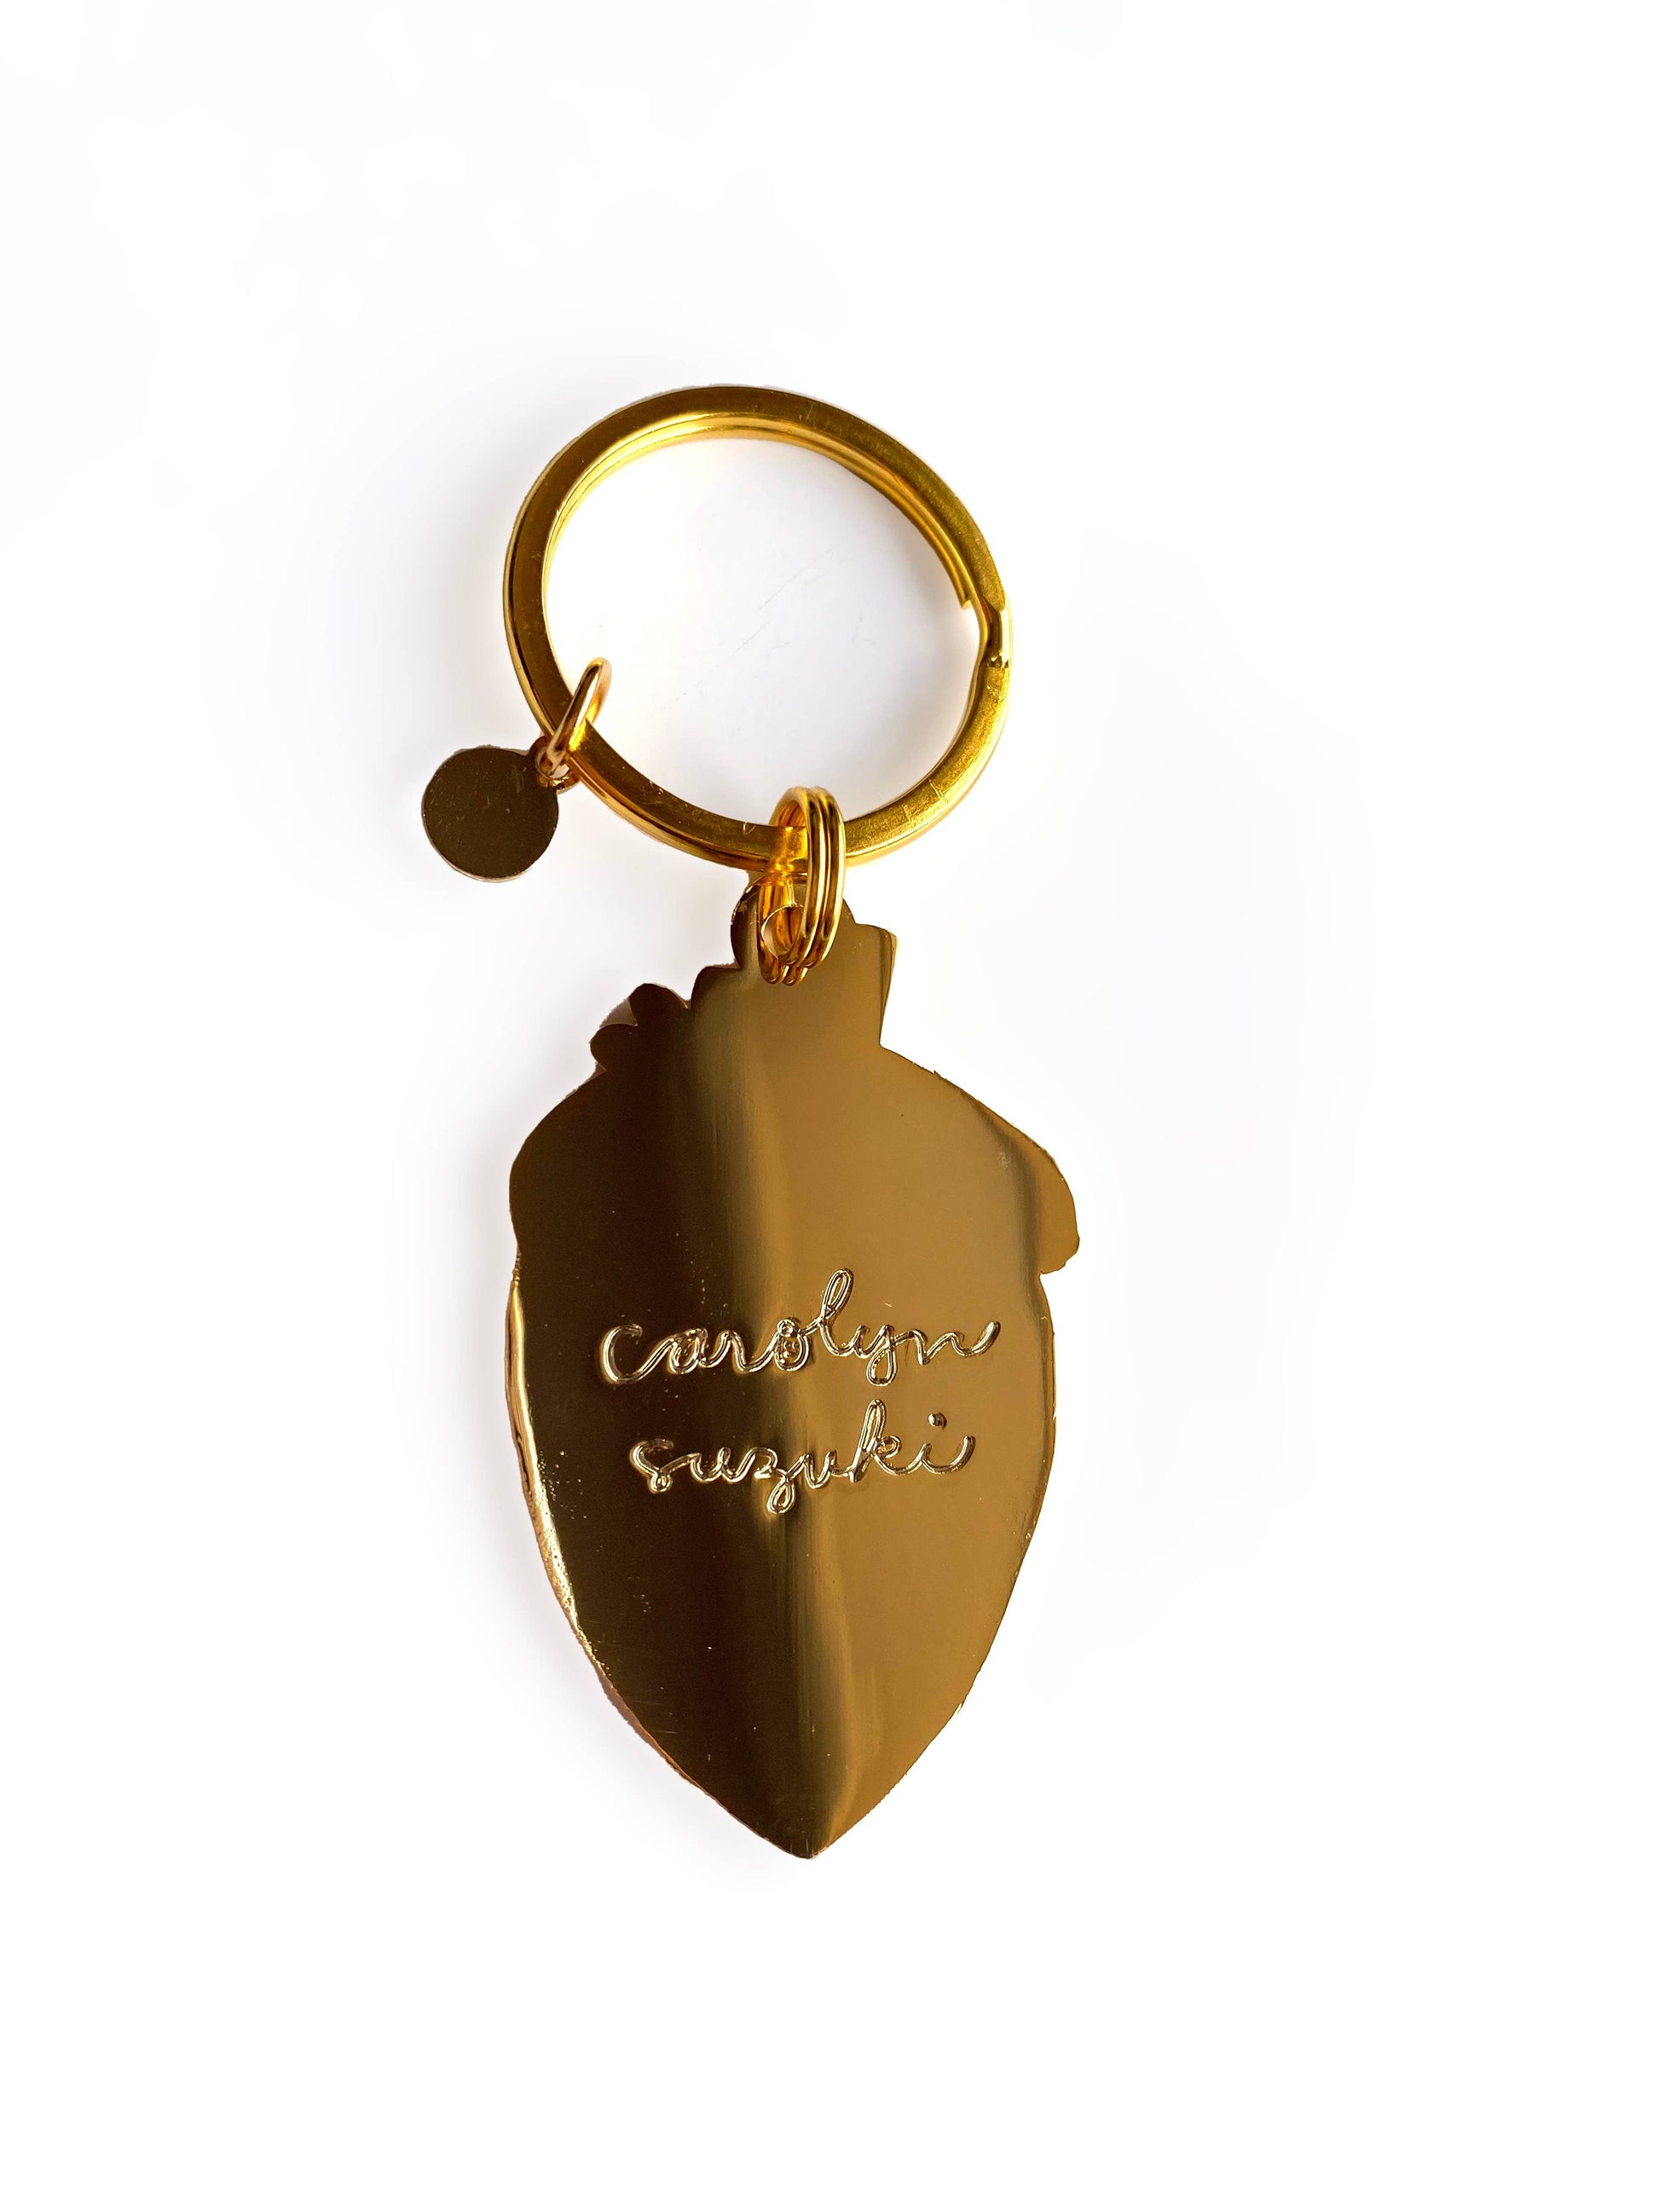 Backside of strawberry keychain. All gold with "Carolyn Suzuki" inscription. 